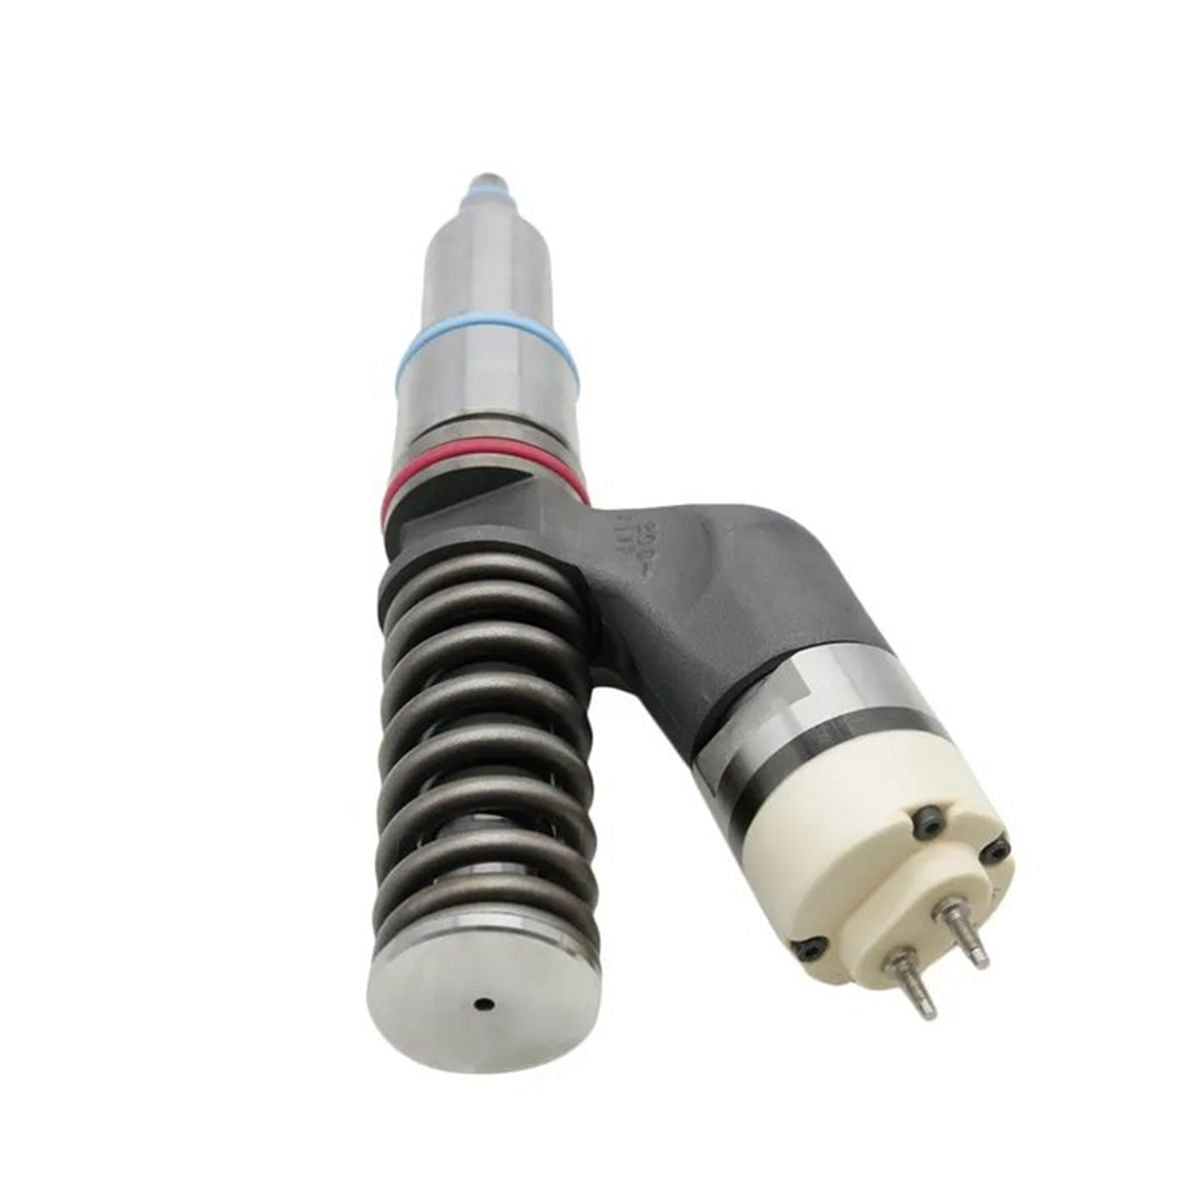 191-3002 0R-9256 Fuel Injector for Caterpillar 3406E Diesel Engine - Sinocmp